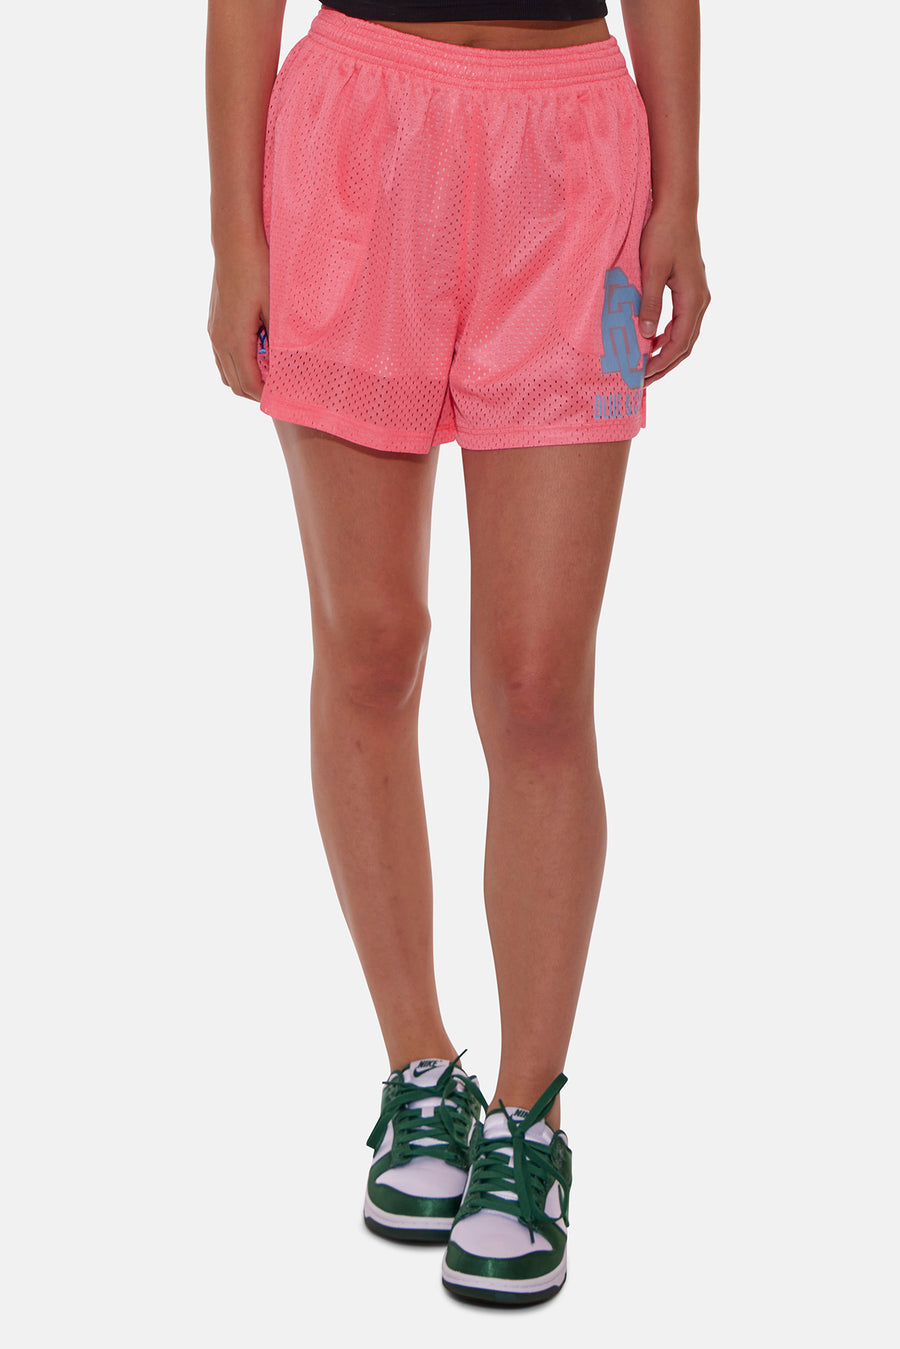 Blue&Cream Women's Mesh Shorts Hot Pink